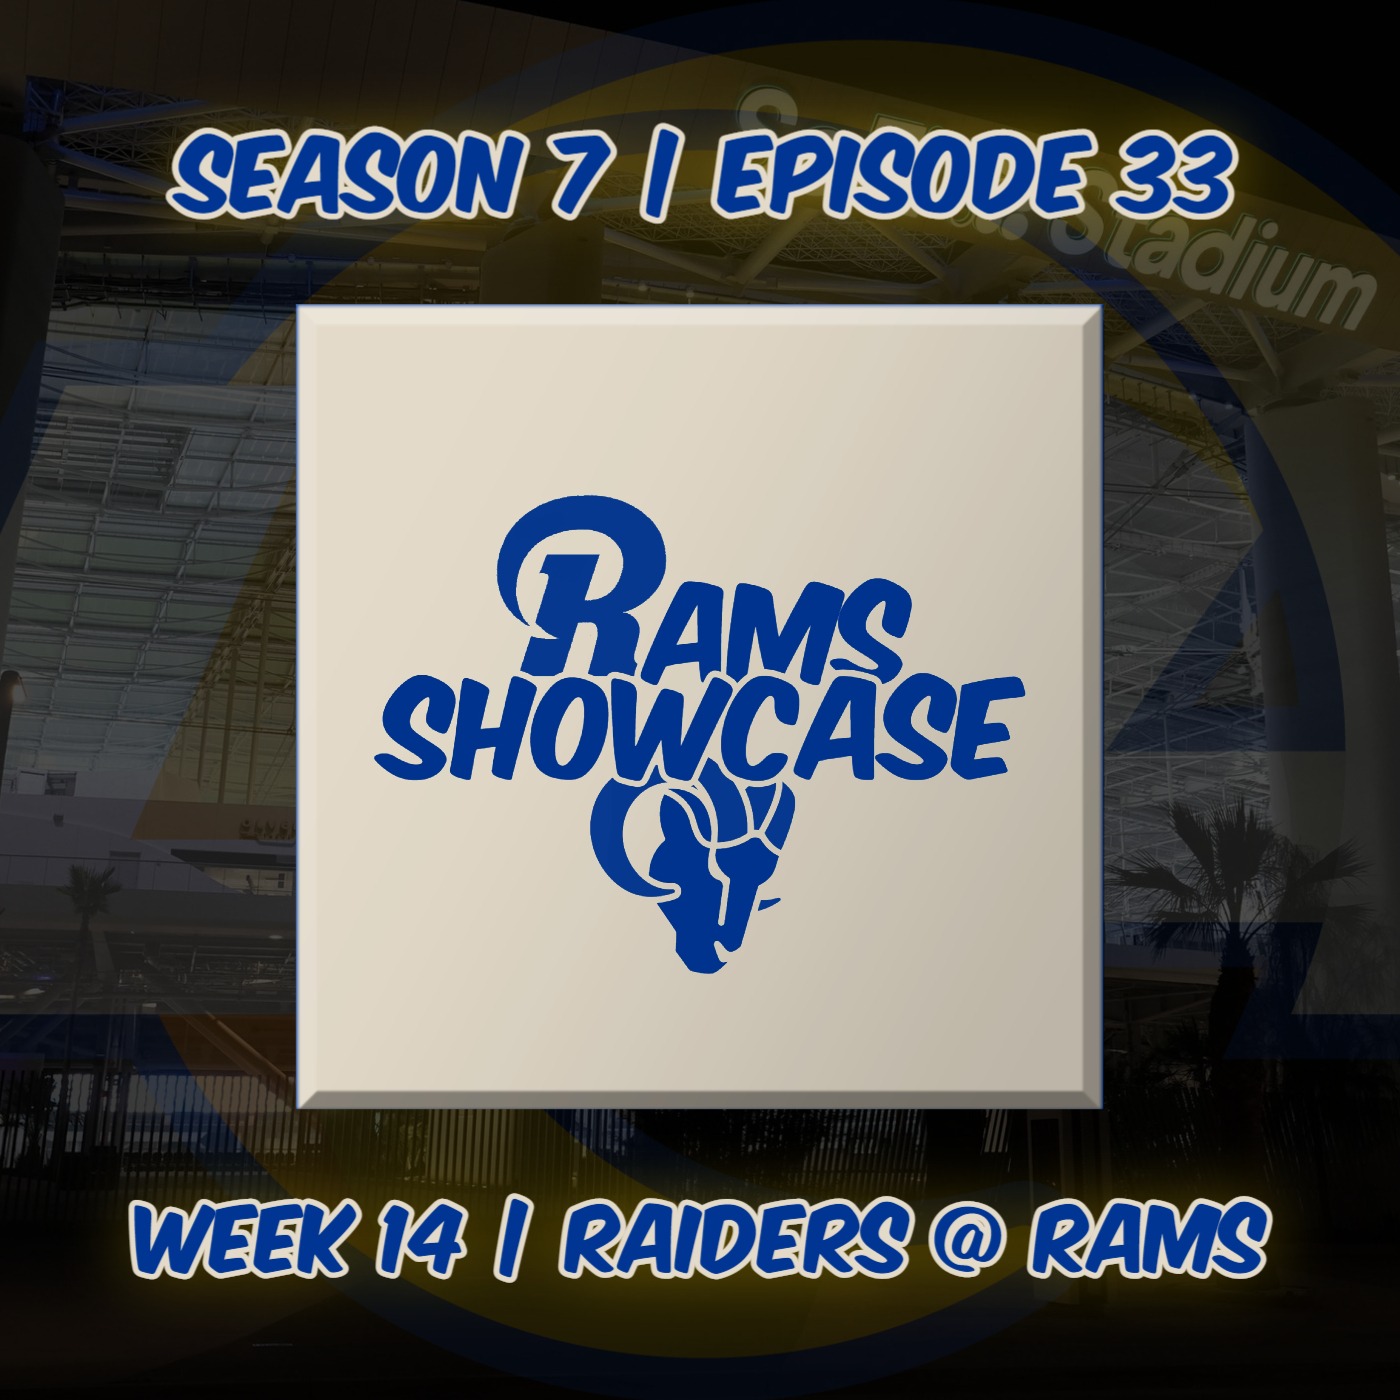 Rams Showcase | Week 14 - Raiders @ Rams | FULL PODCAST